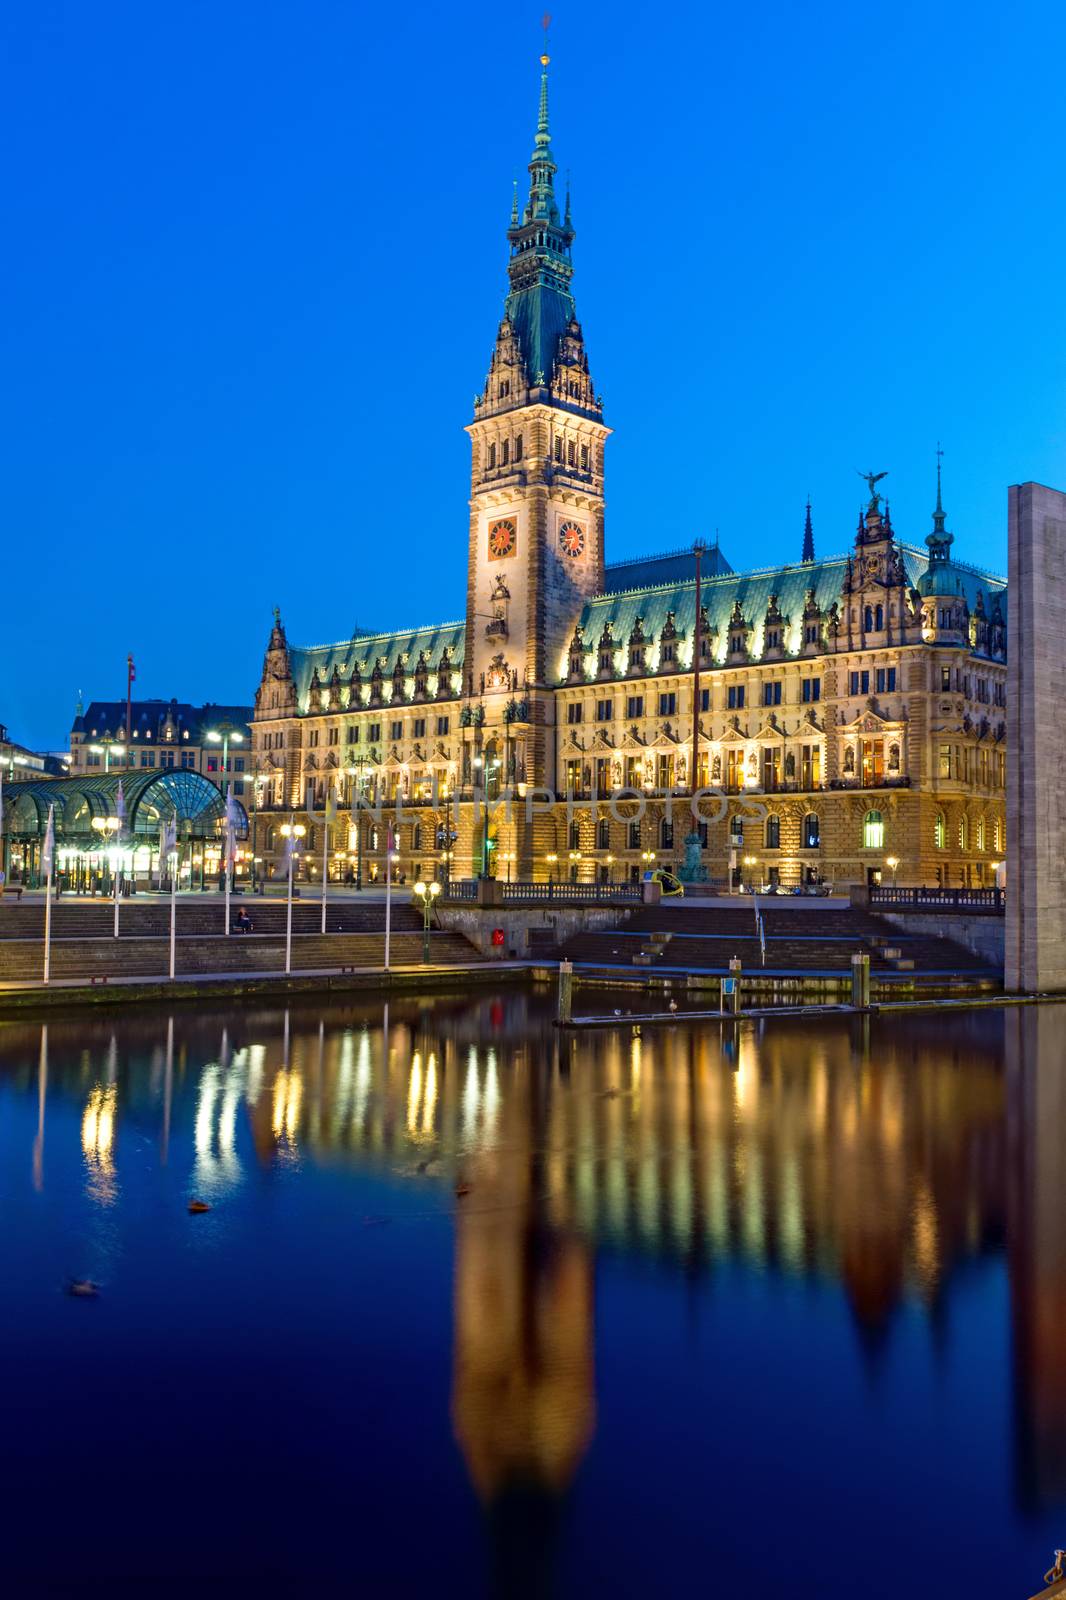 The townhall of Hamburg in Germany illuminated at night